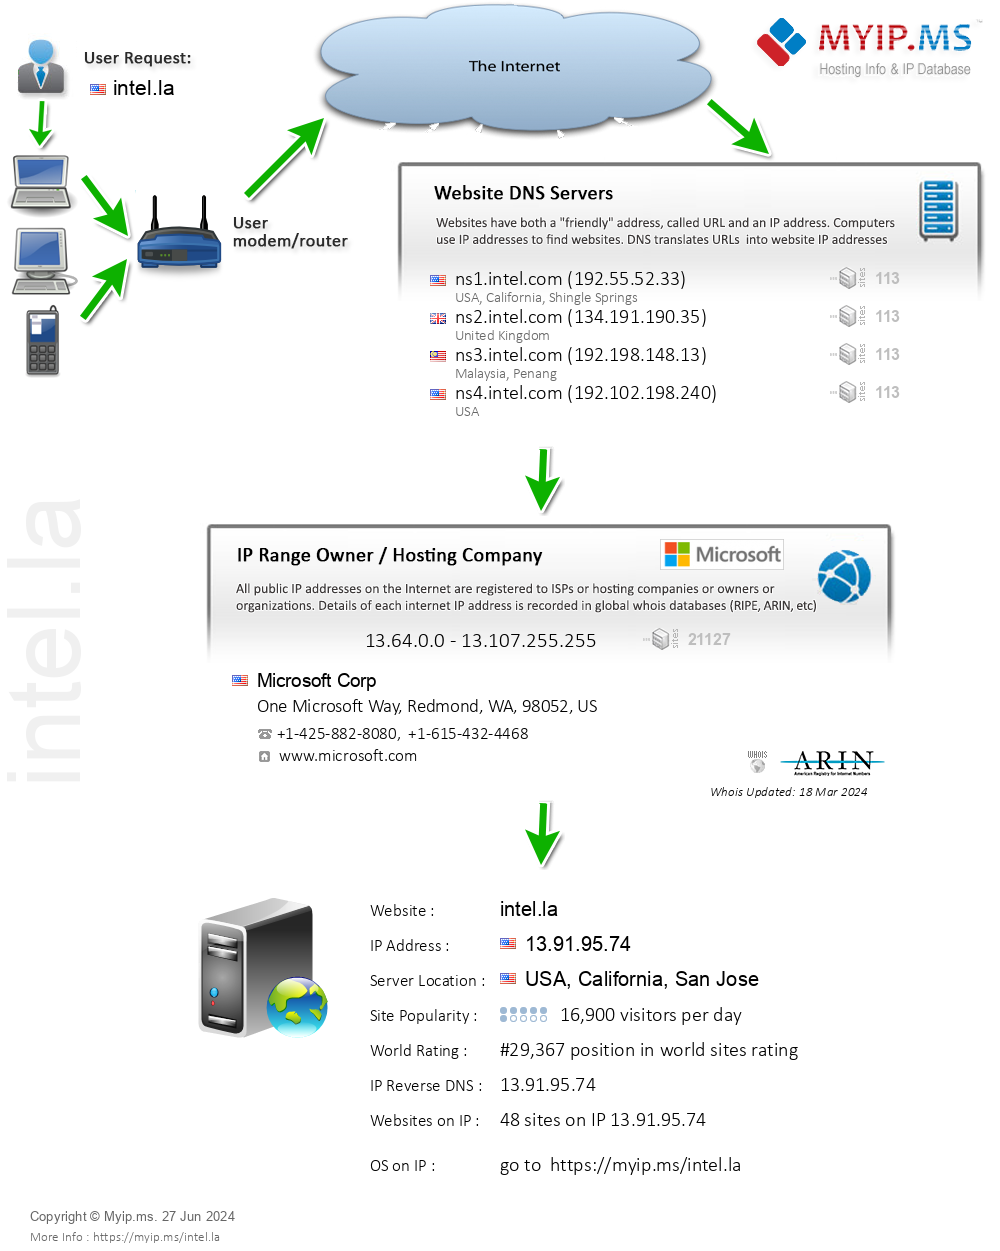 Intel.la - Website Hosting Visual IP Diagram